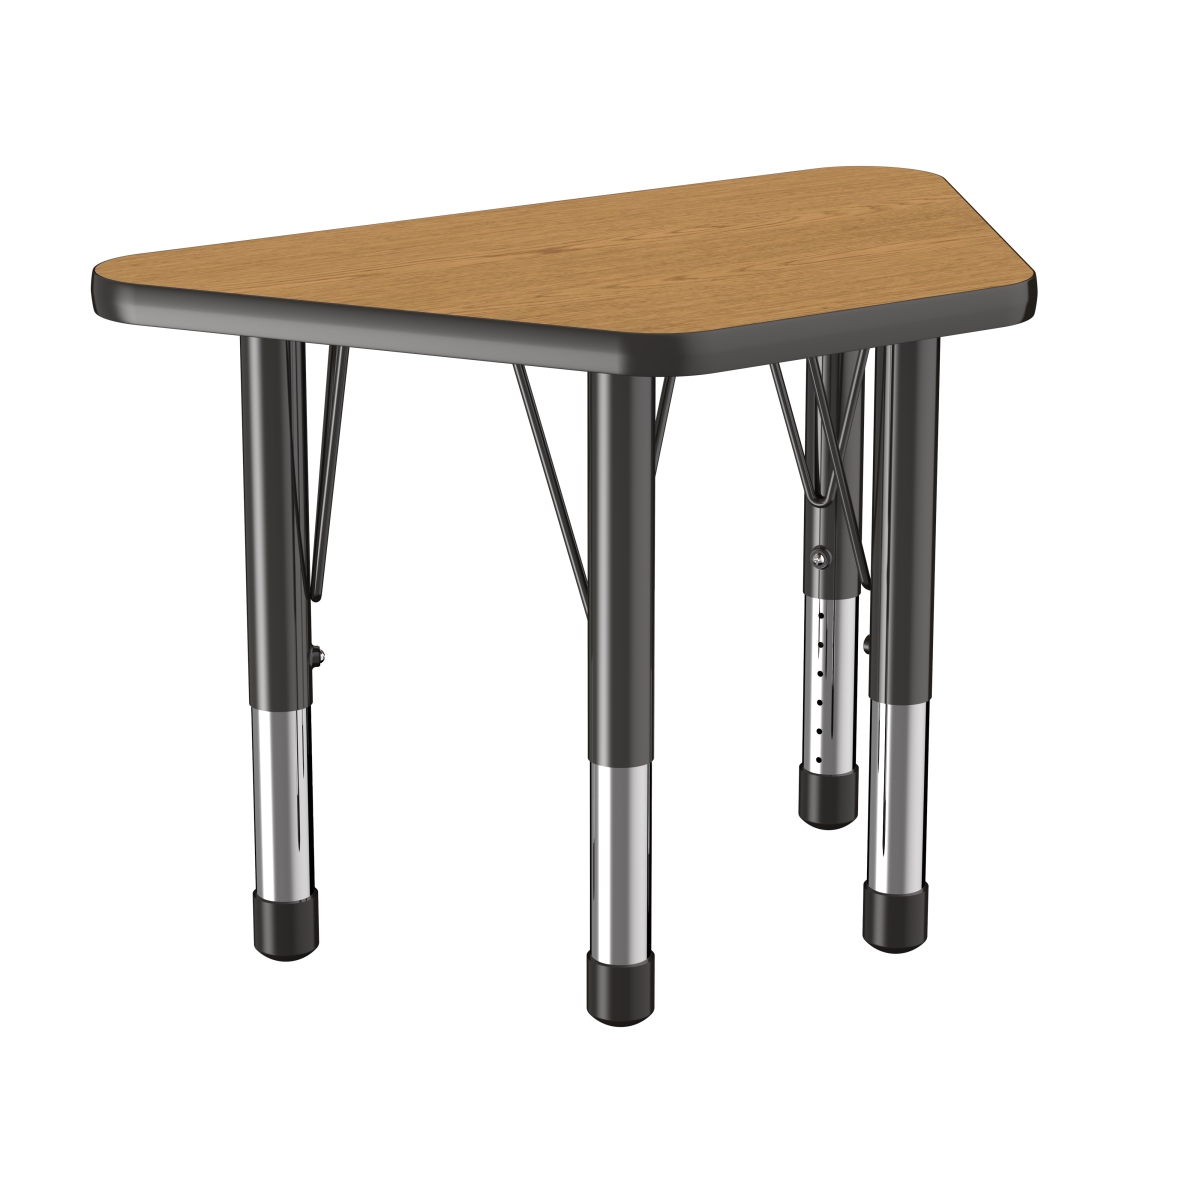 10065-okbk 18 X 30 In. Trapezoid T-mold Adjustable Activity Table With Chunky Leg - Oak & Black